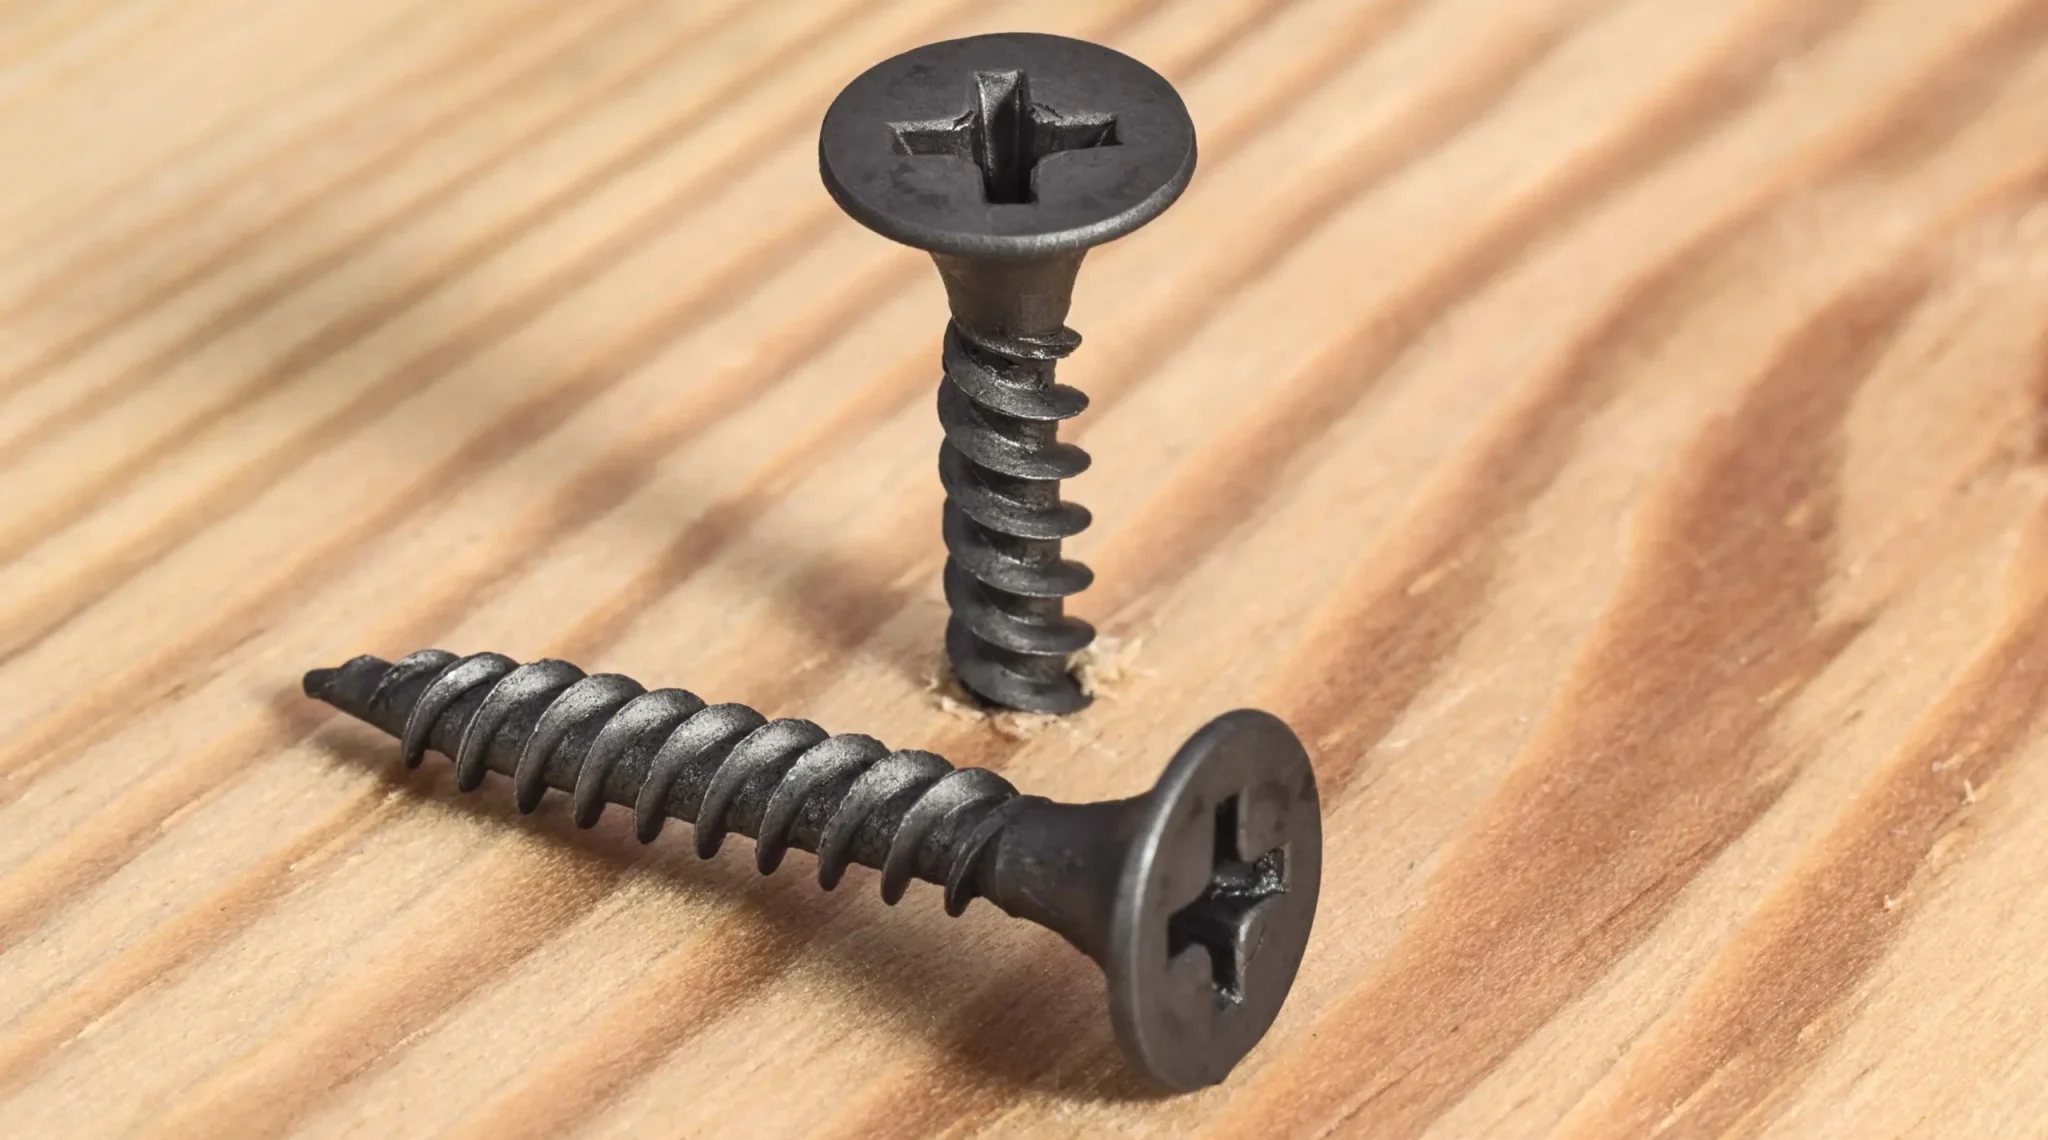 pair-screws-wooden-surface-close-up-construction-repair